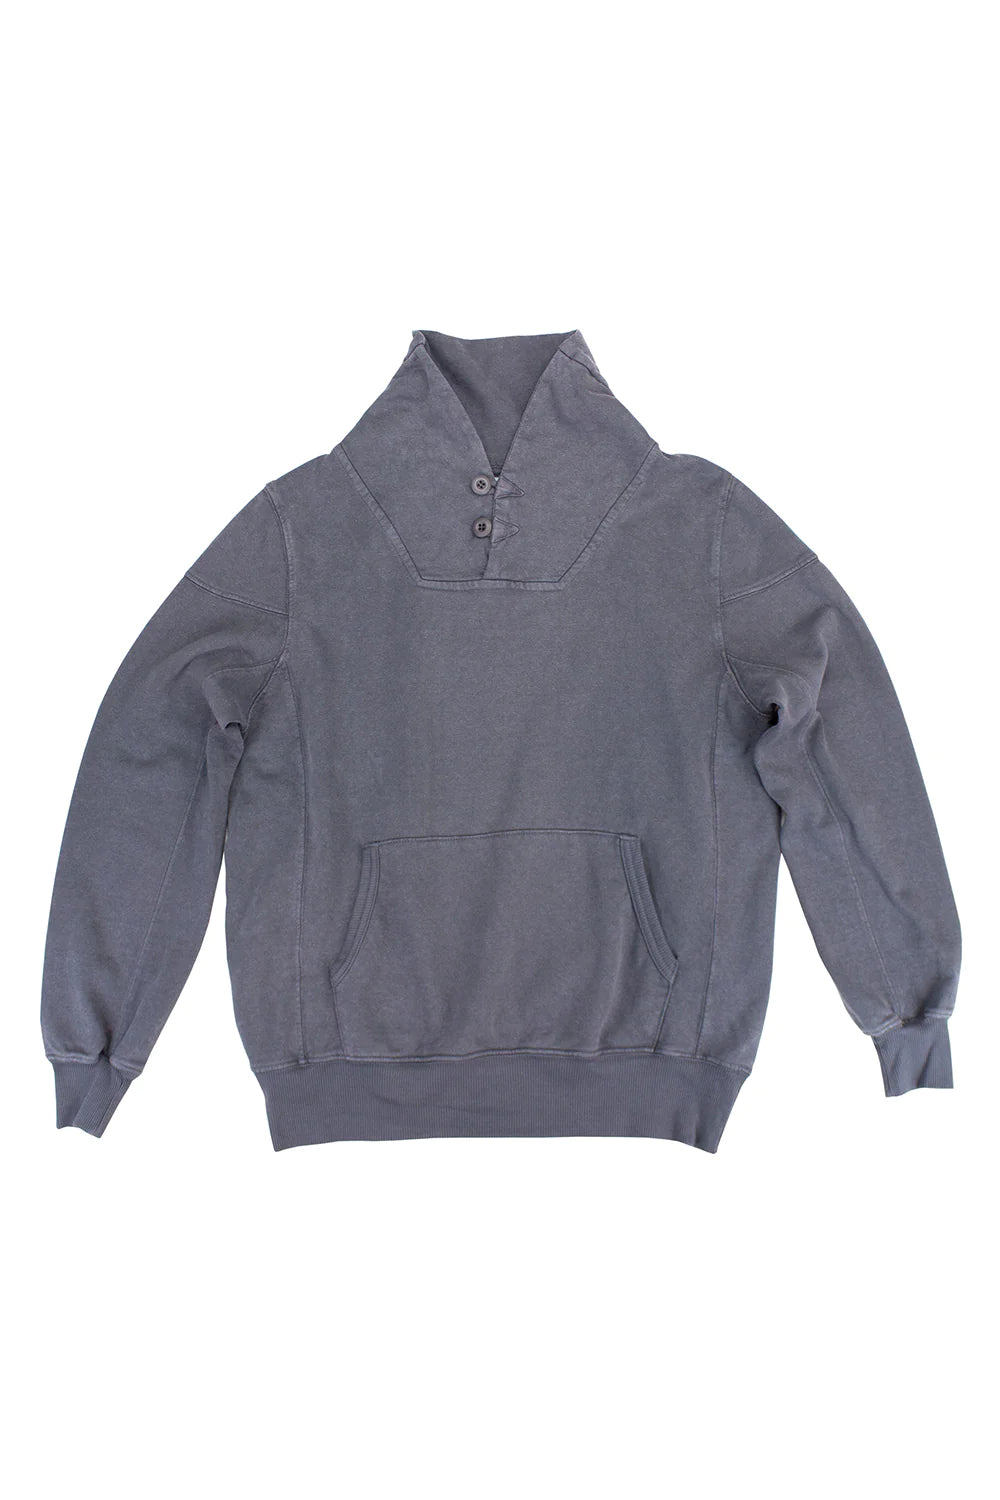 Jungmaven | Whittier Sweatshirt - Diesel Gray